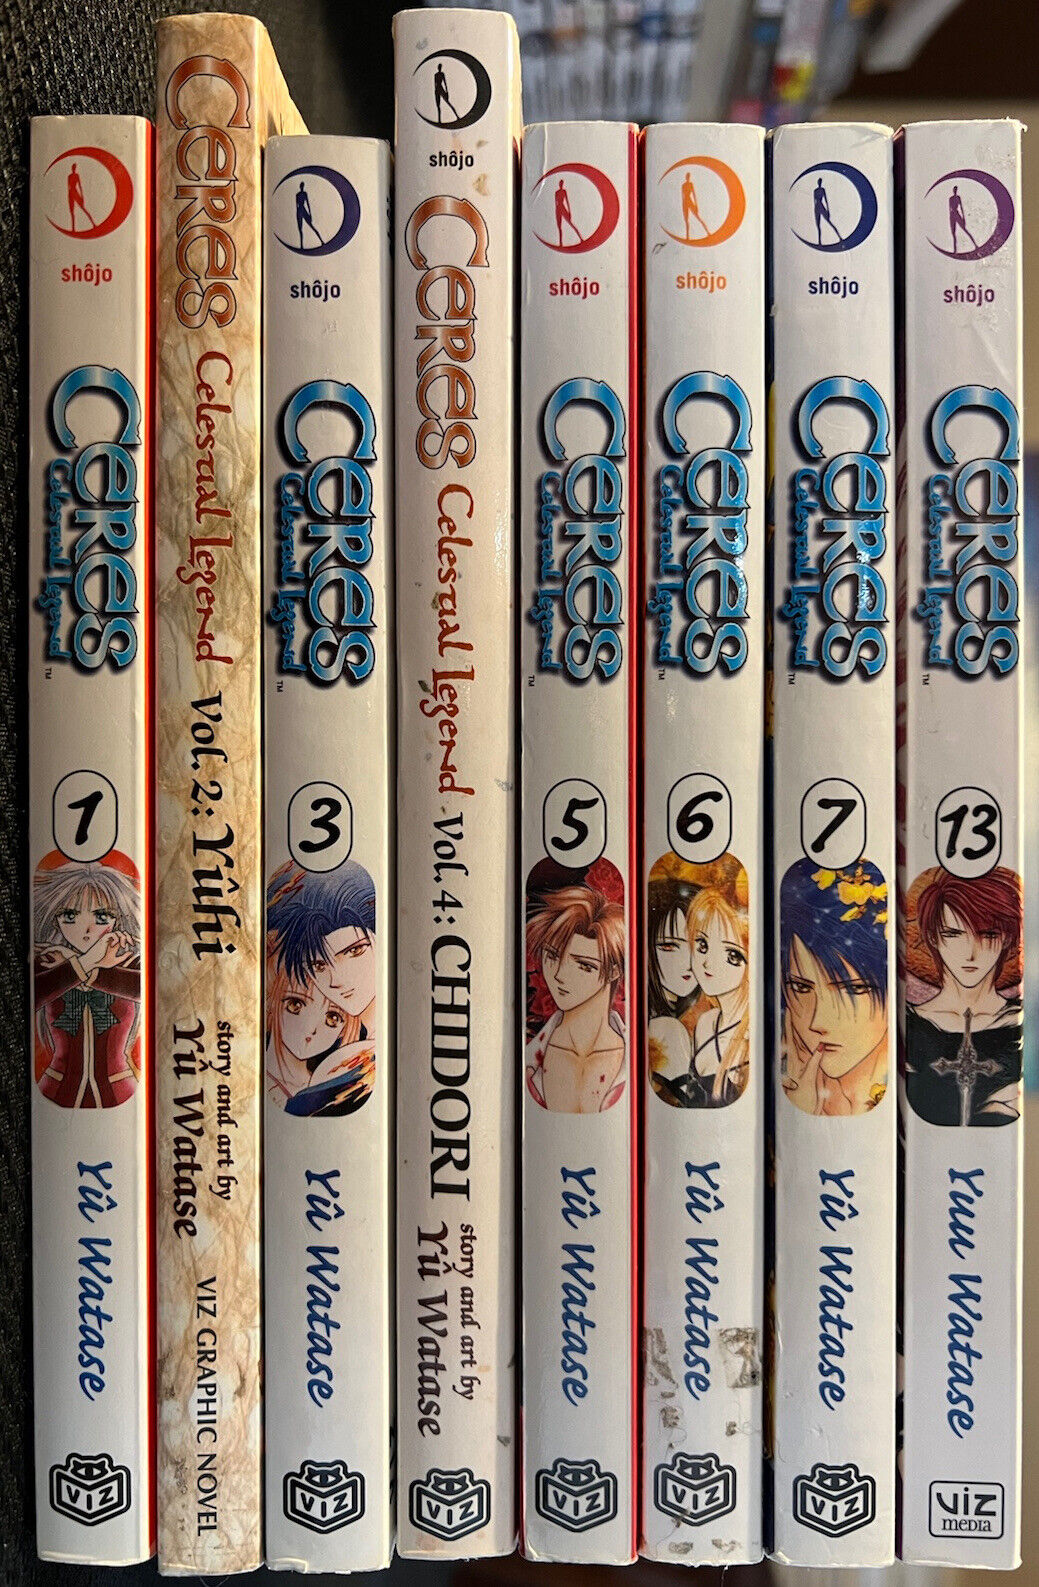 Ceres Celestial Legend 1-7, 13 Manga 🪄 Fantasy Romance English Viz